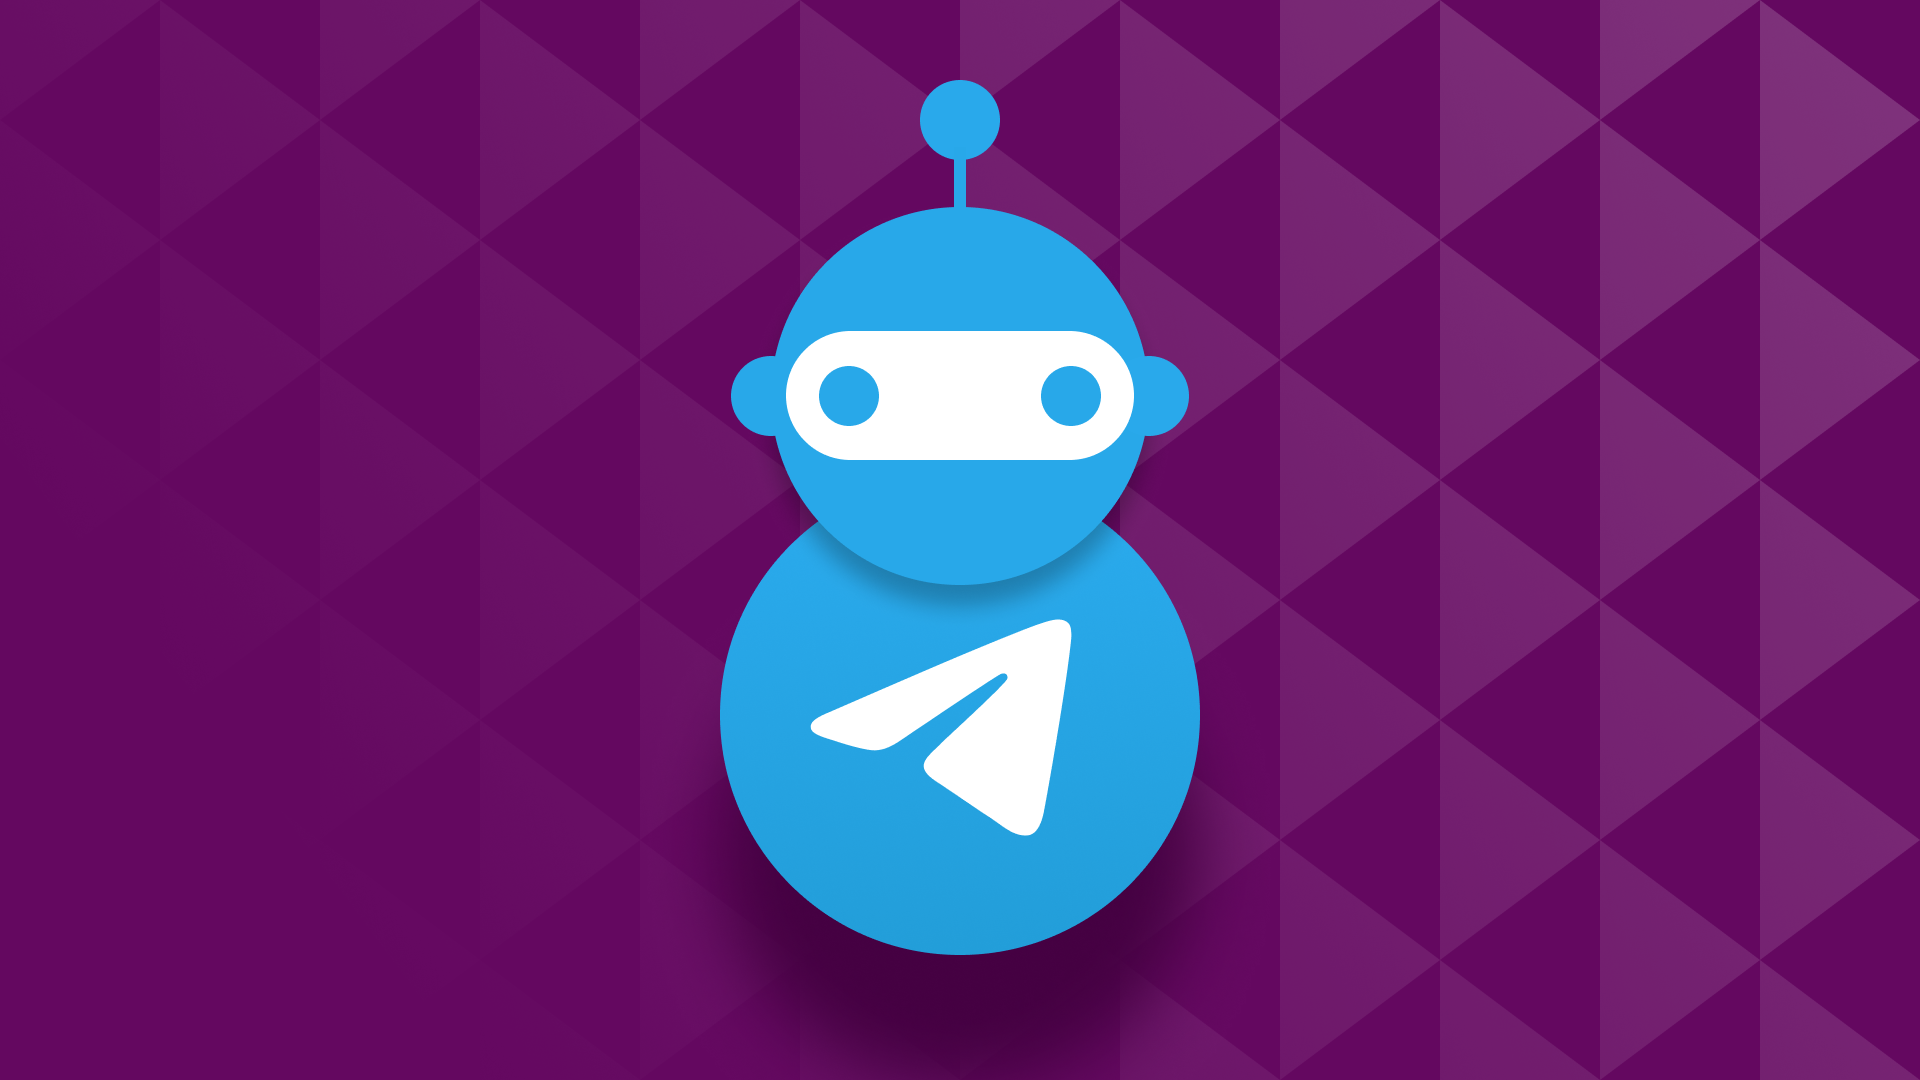 Deploy your Telegram bot on the Doprax cloud platform.